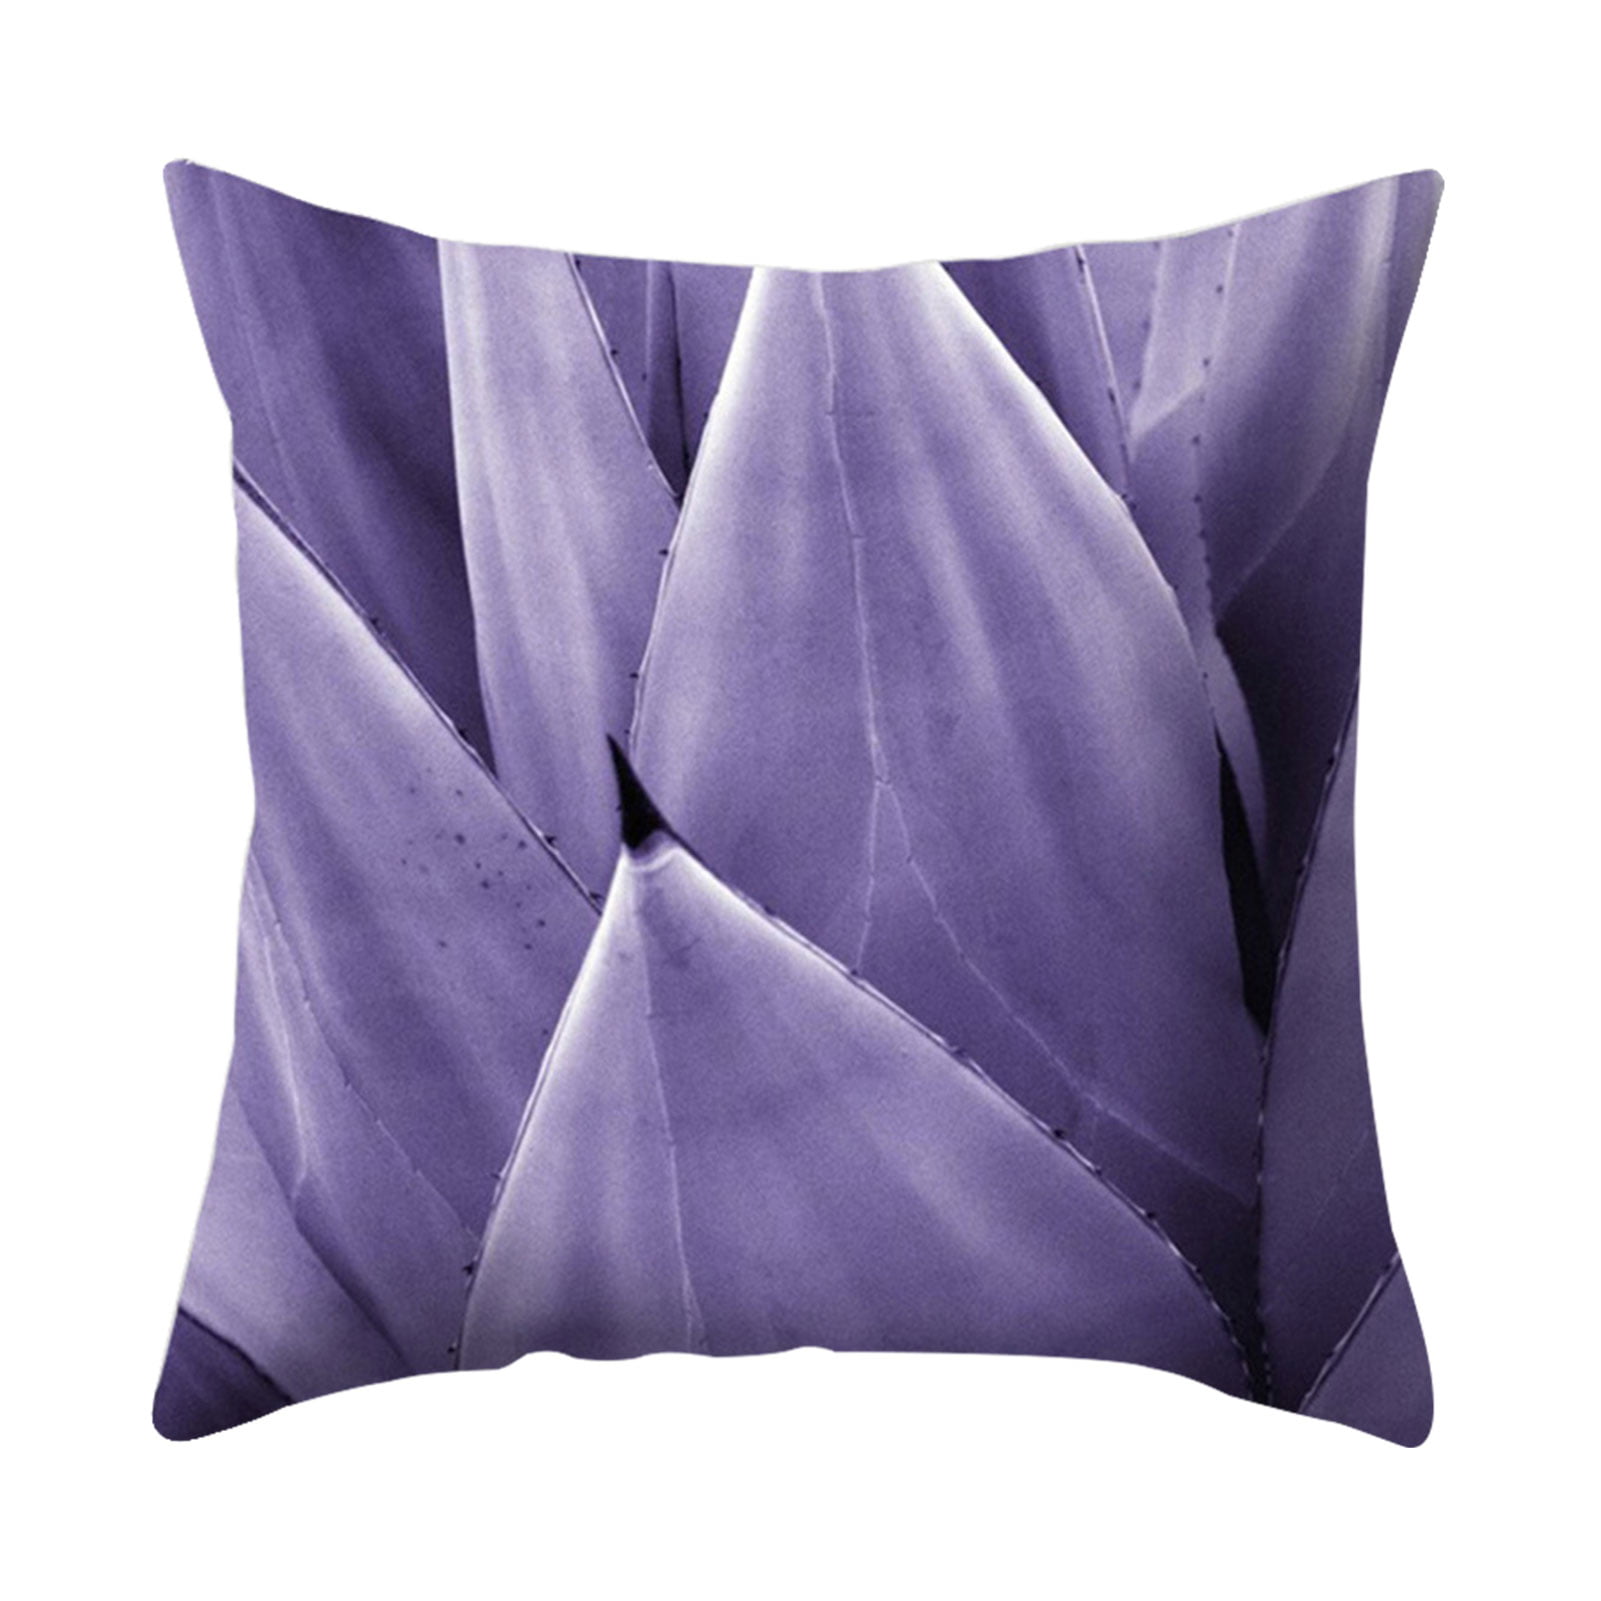 Details about   Square Pillowcases Geometric Print Pillowslip Sofa Cushion Covers Home Supplies 